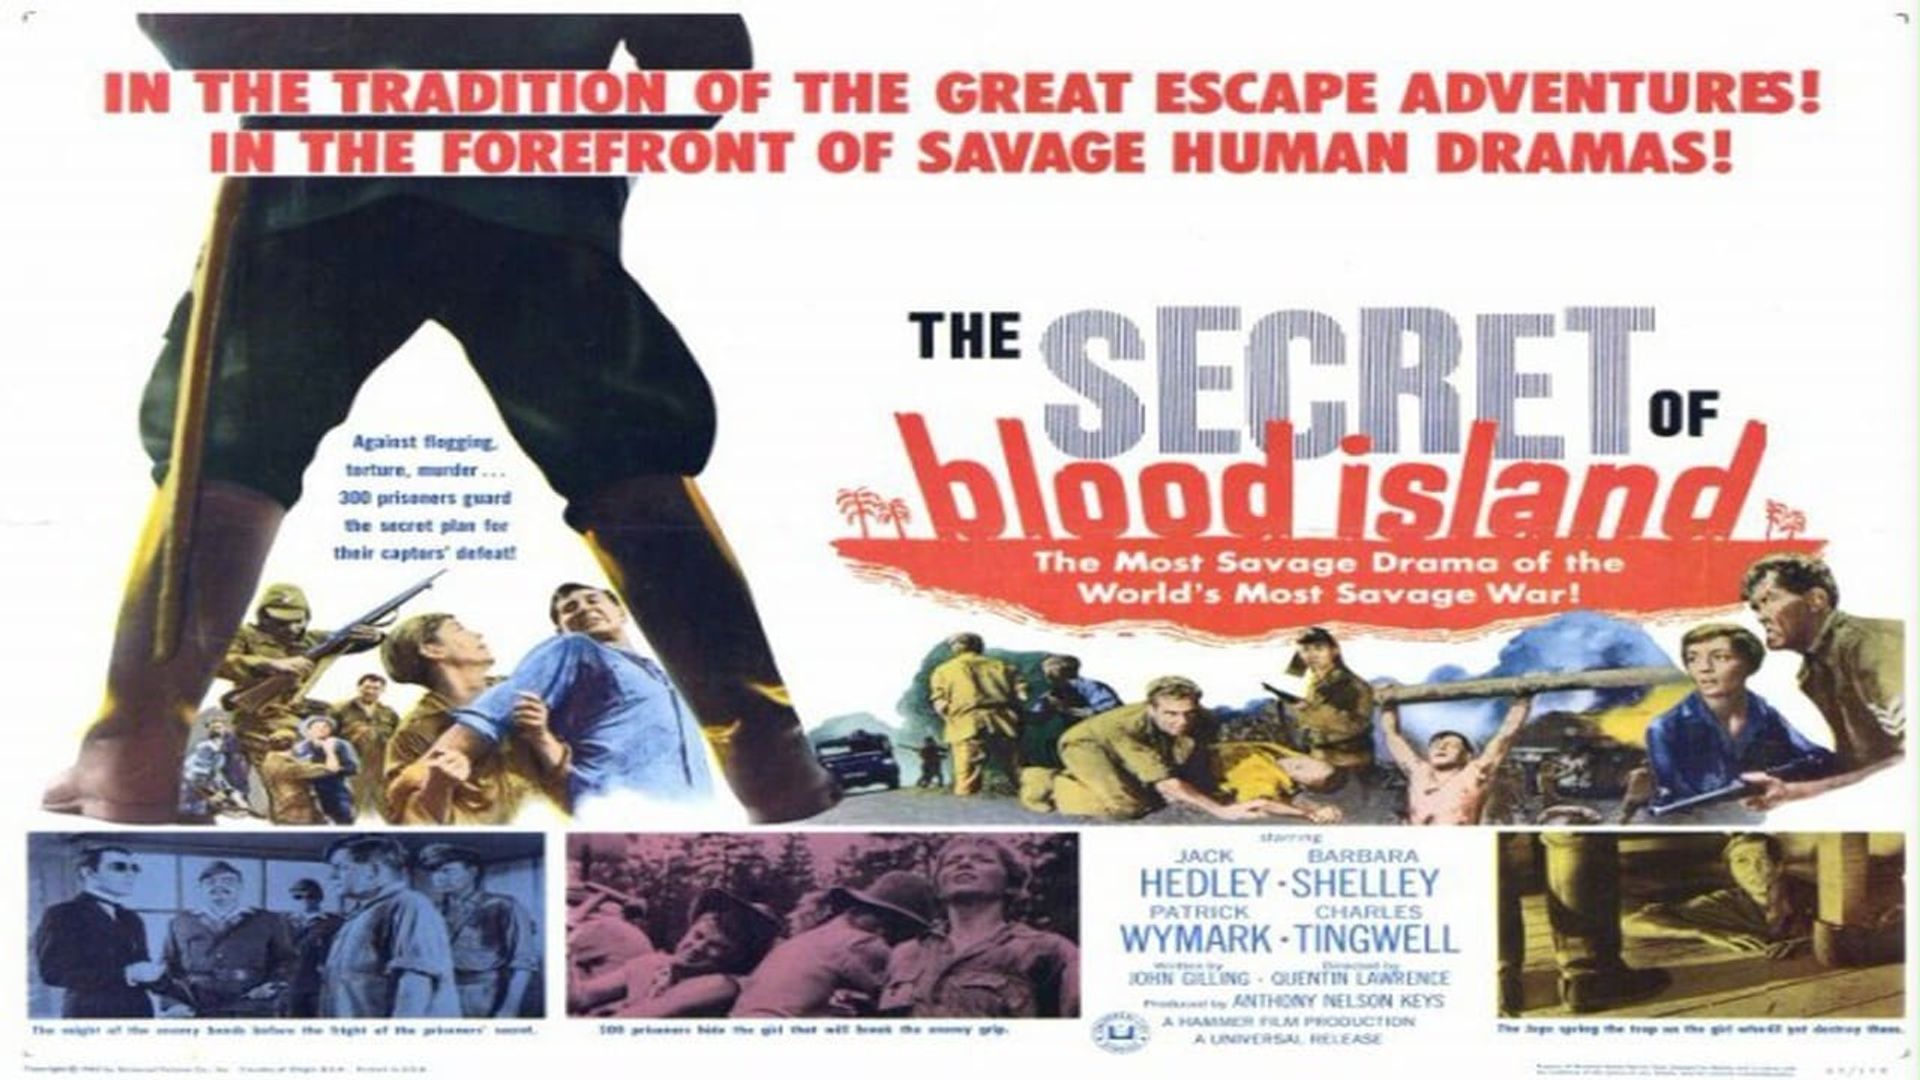 The Secret of Blood Island background